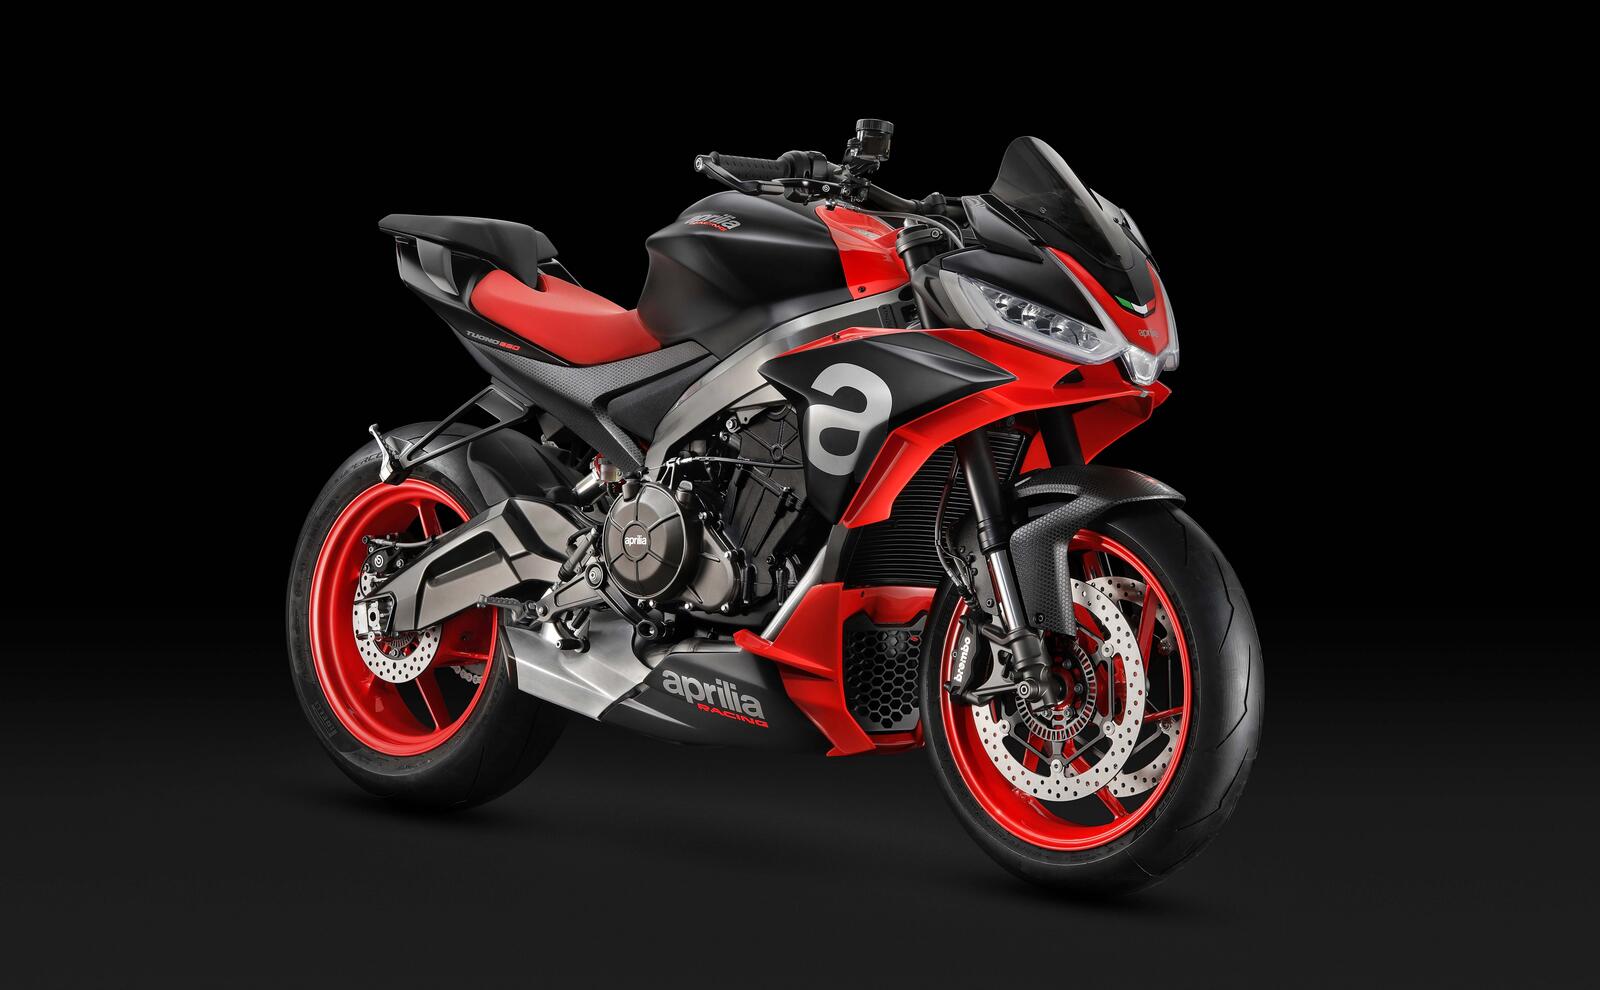 Бесплатное фото Спортивный мотоцикл Aprilia Tuono 660 Concept красного цвета